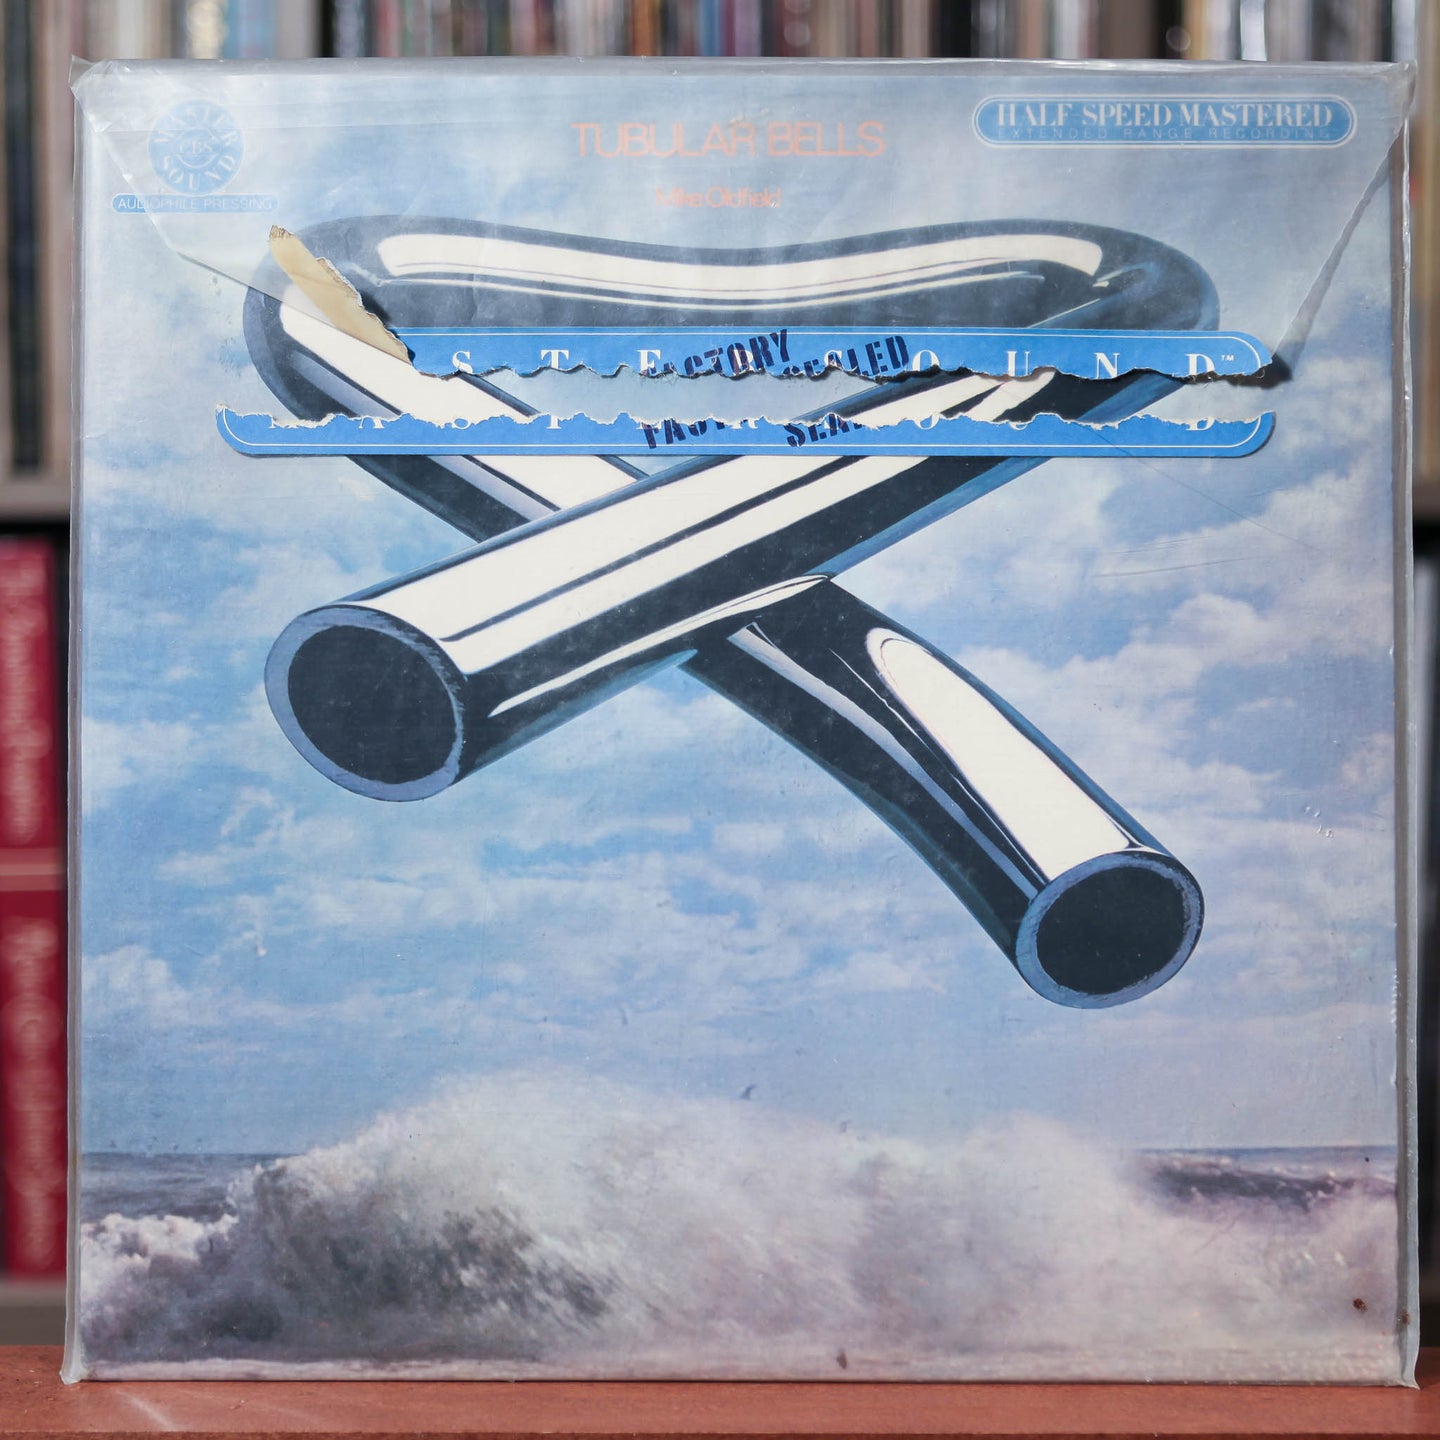 Mike Oldfield - Tubular Bells - Half-Speed Master 1973 Epic, VG+/NM